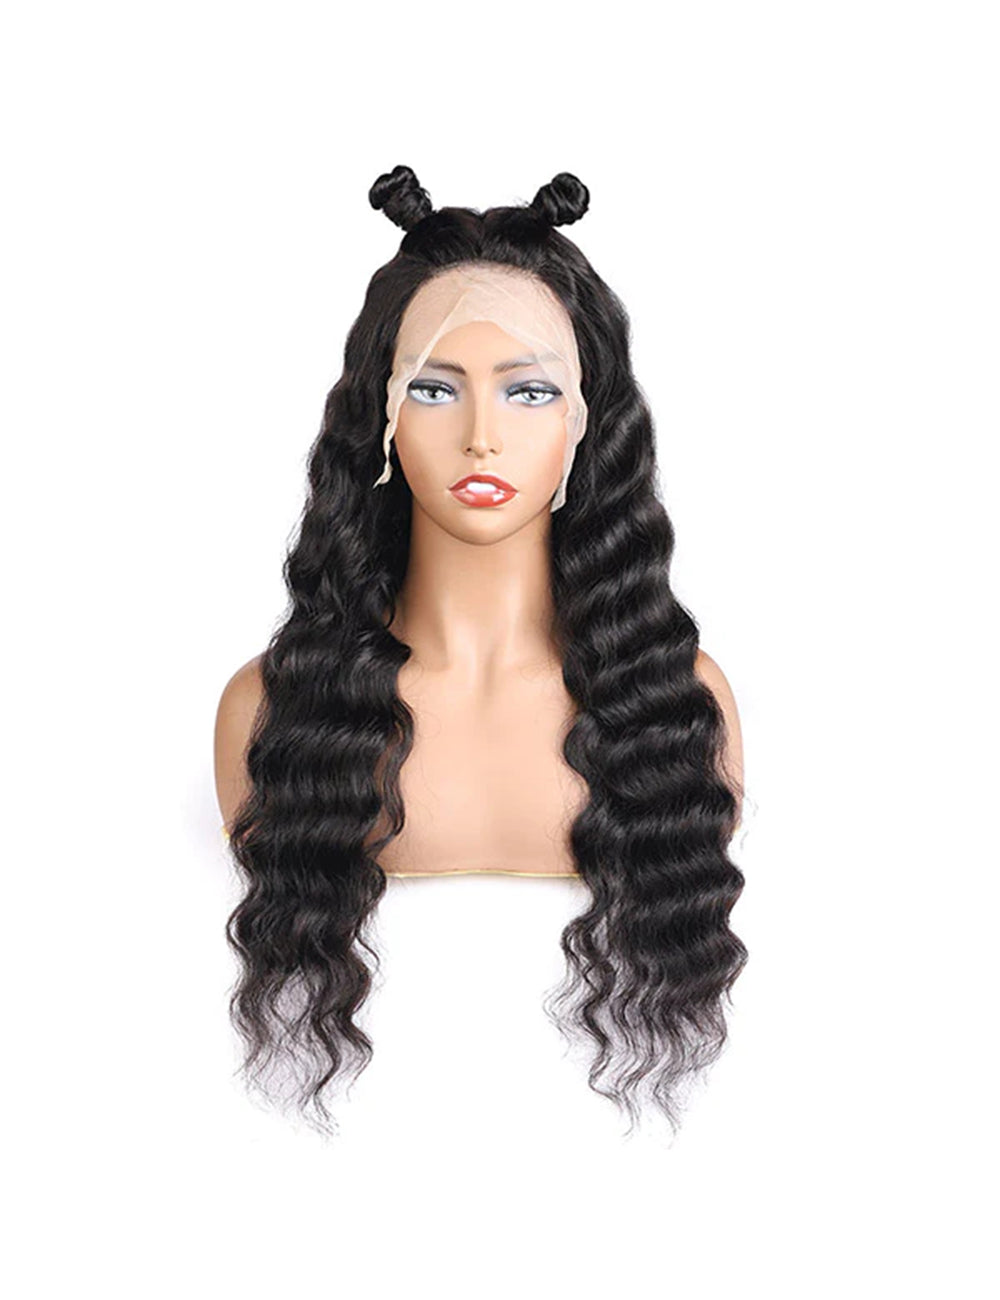 Glueless Loose Deep Wave Wig 13x6 HD Lace Front Wig 200% Density Brazilian Human Hair Wigs